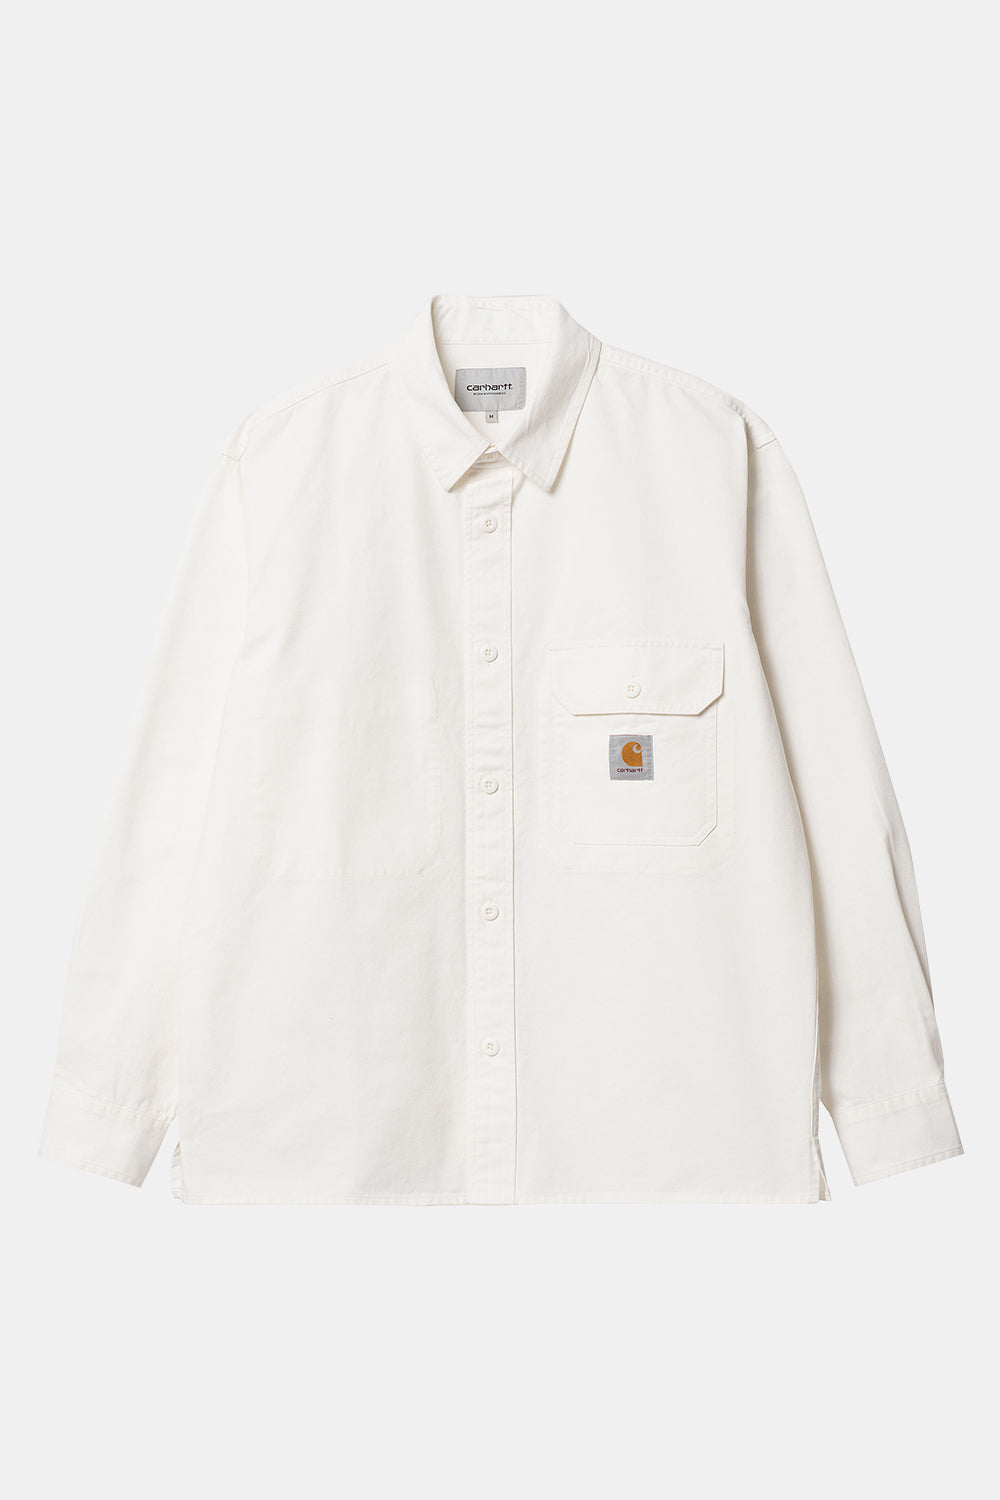 Carhartt WIP Reno Shirt Jacket (Off White)